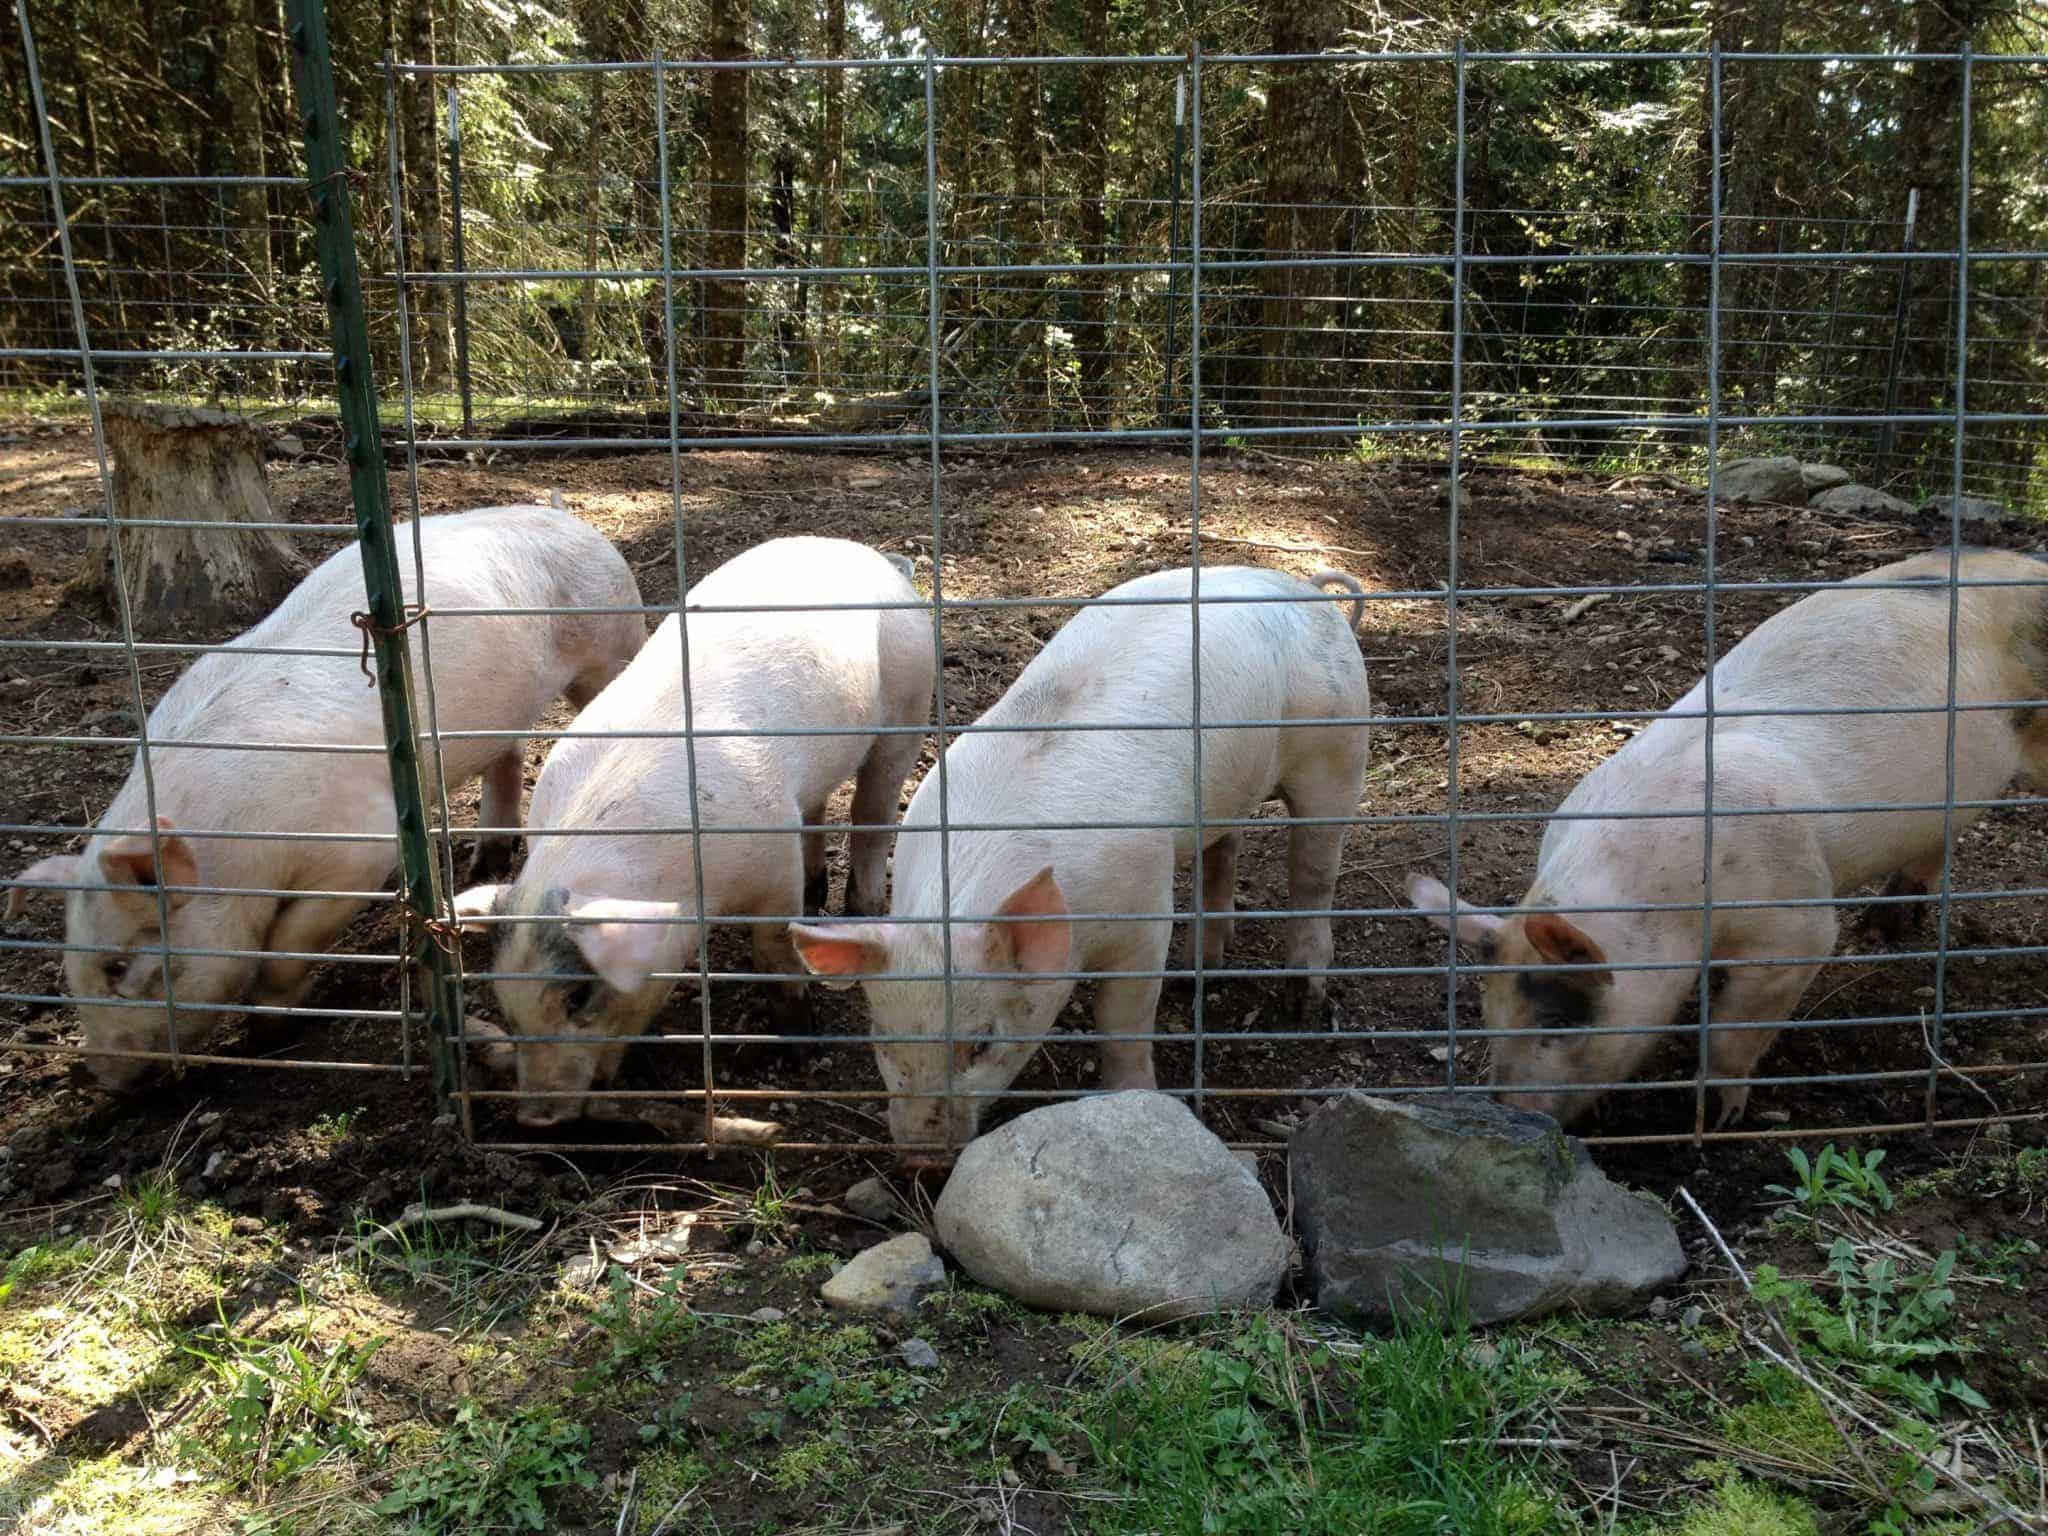 Four pigs inside a fenced area.